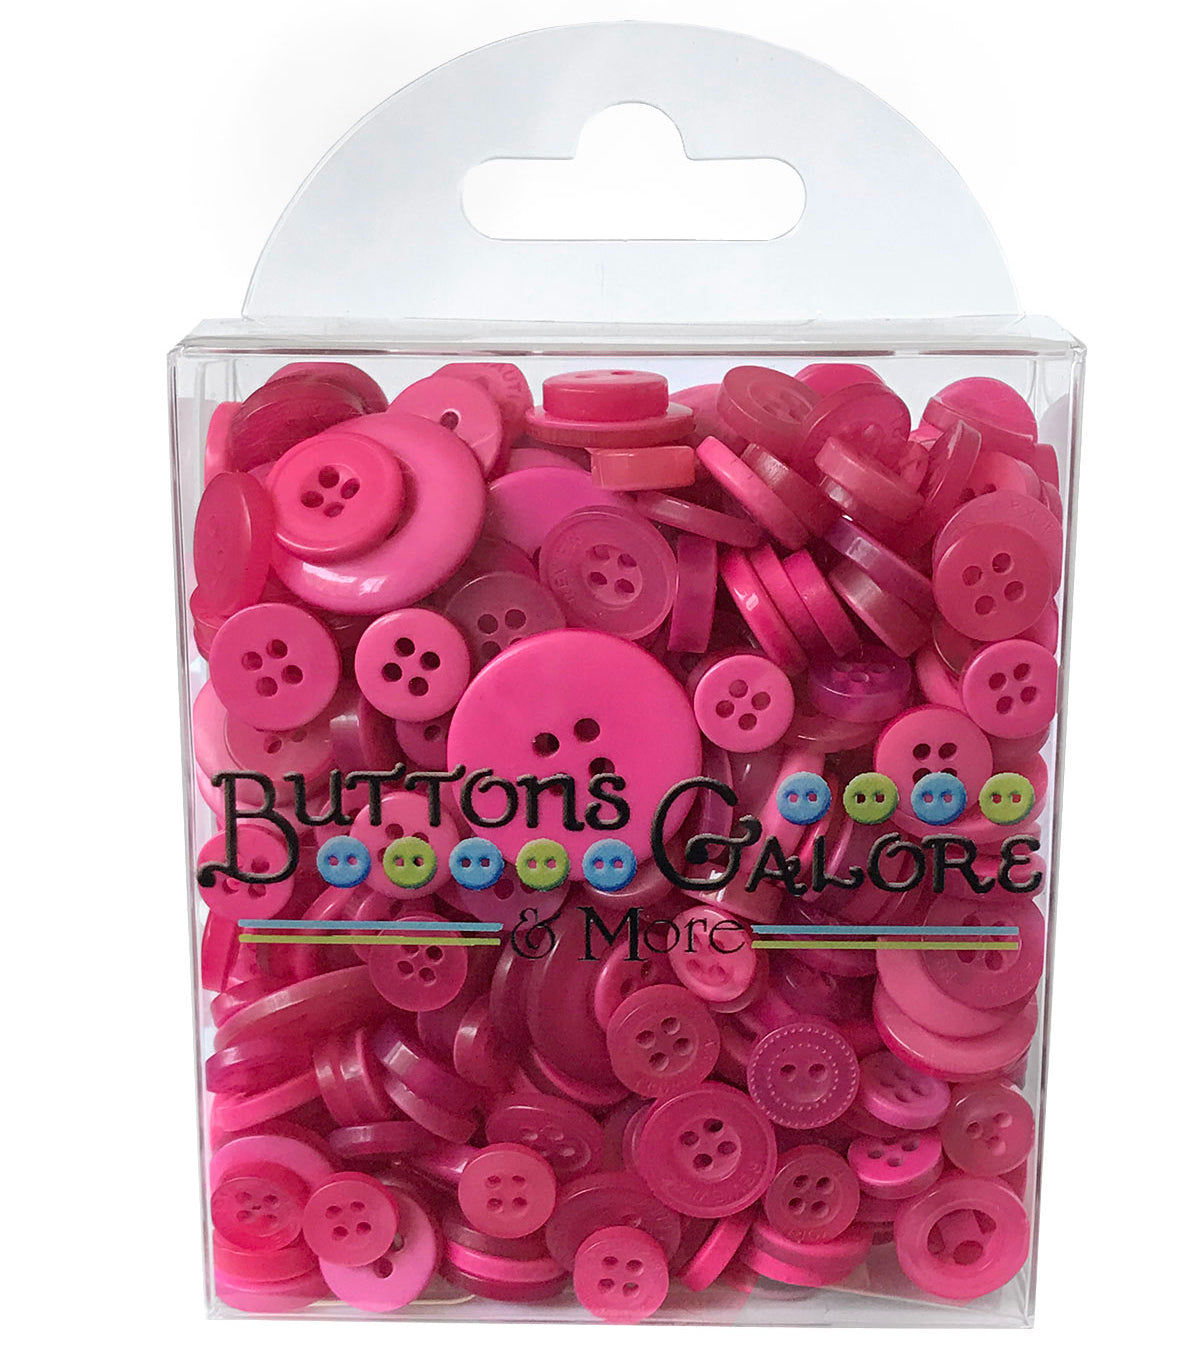 500 Pink Button Small Button Mix, Pink, Sewing Buttons, Craft Buttons, Grab  Bag, Art Buttons 1362 A 